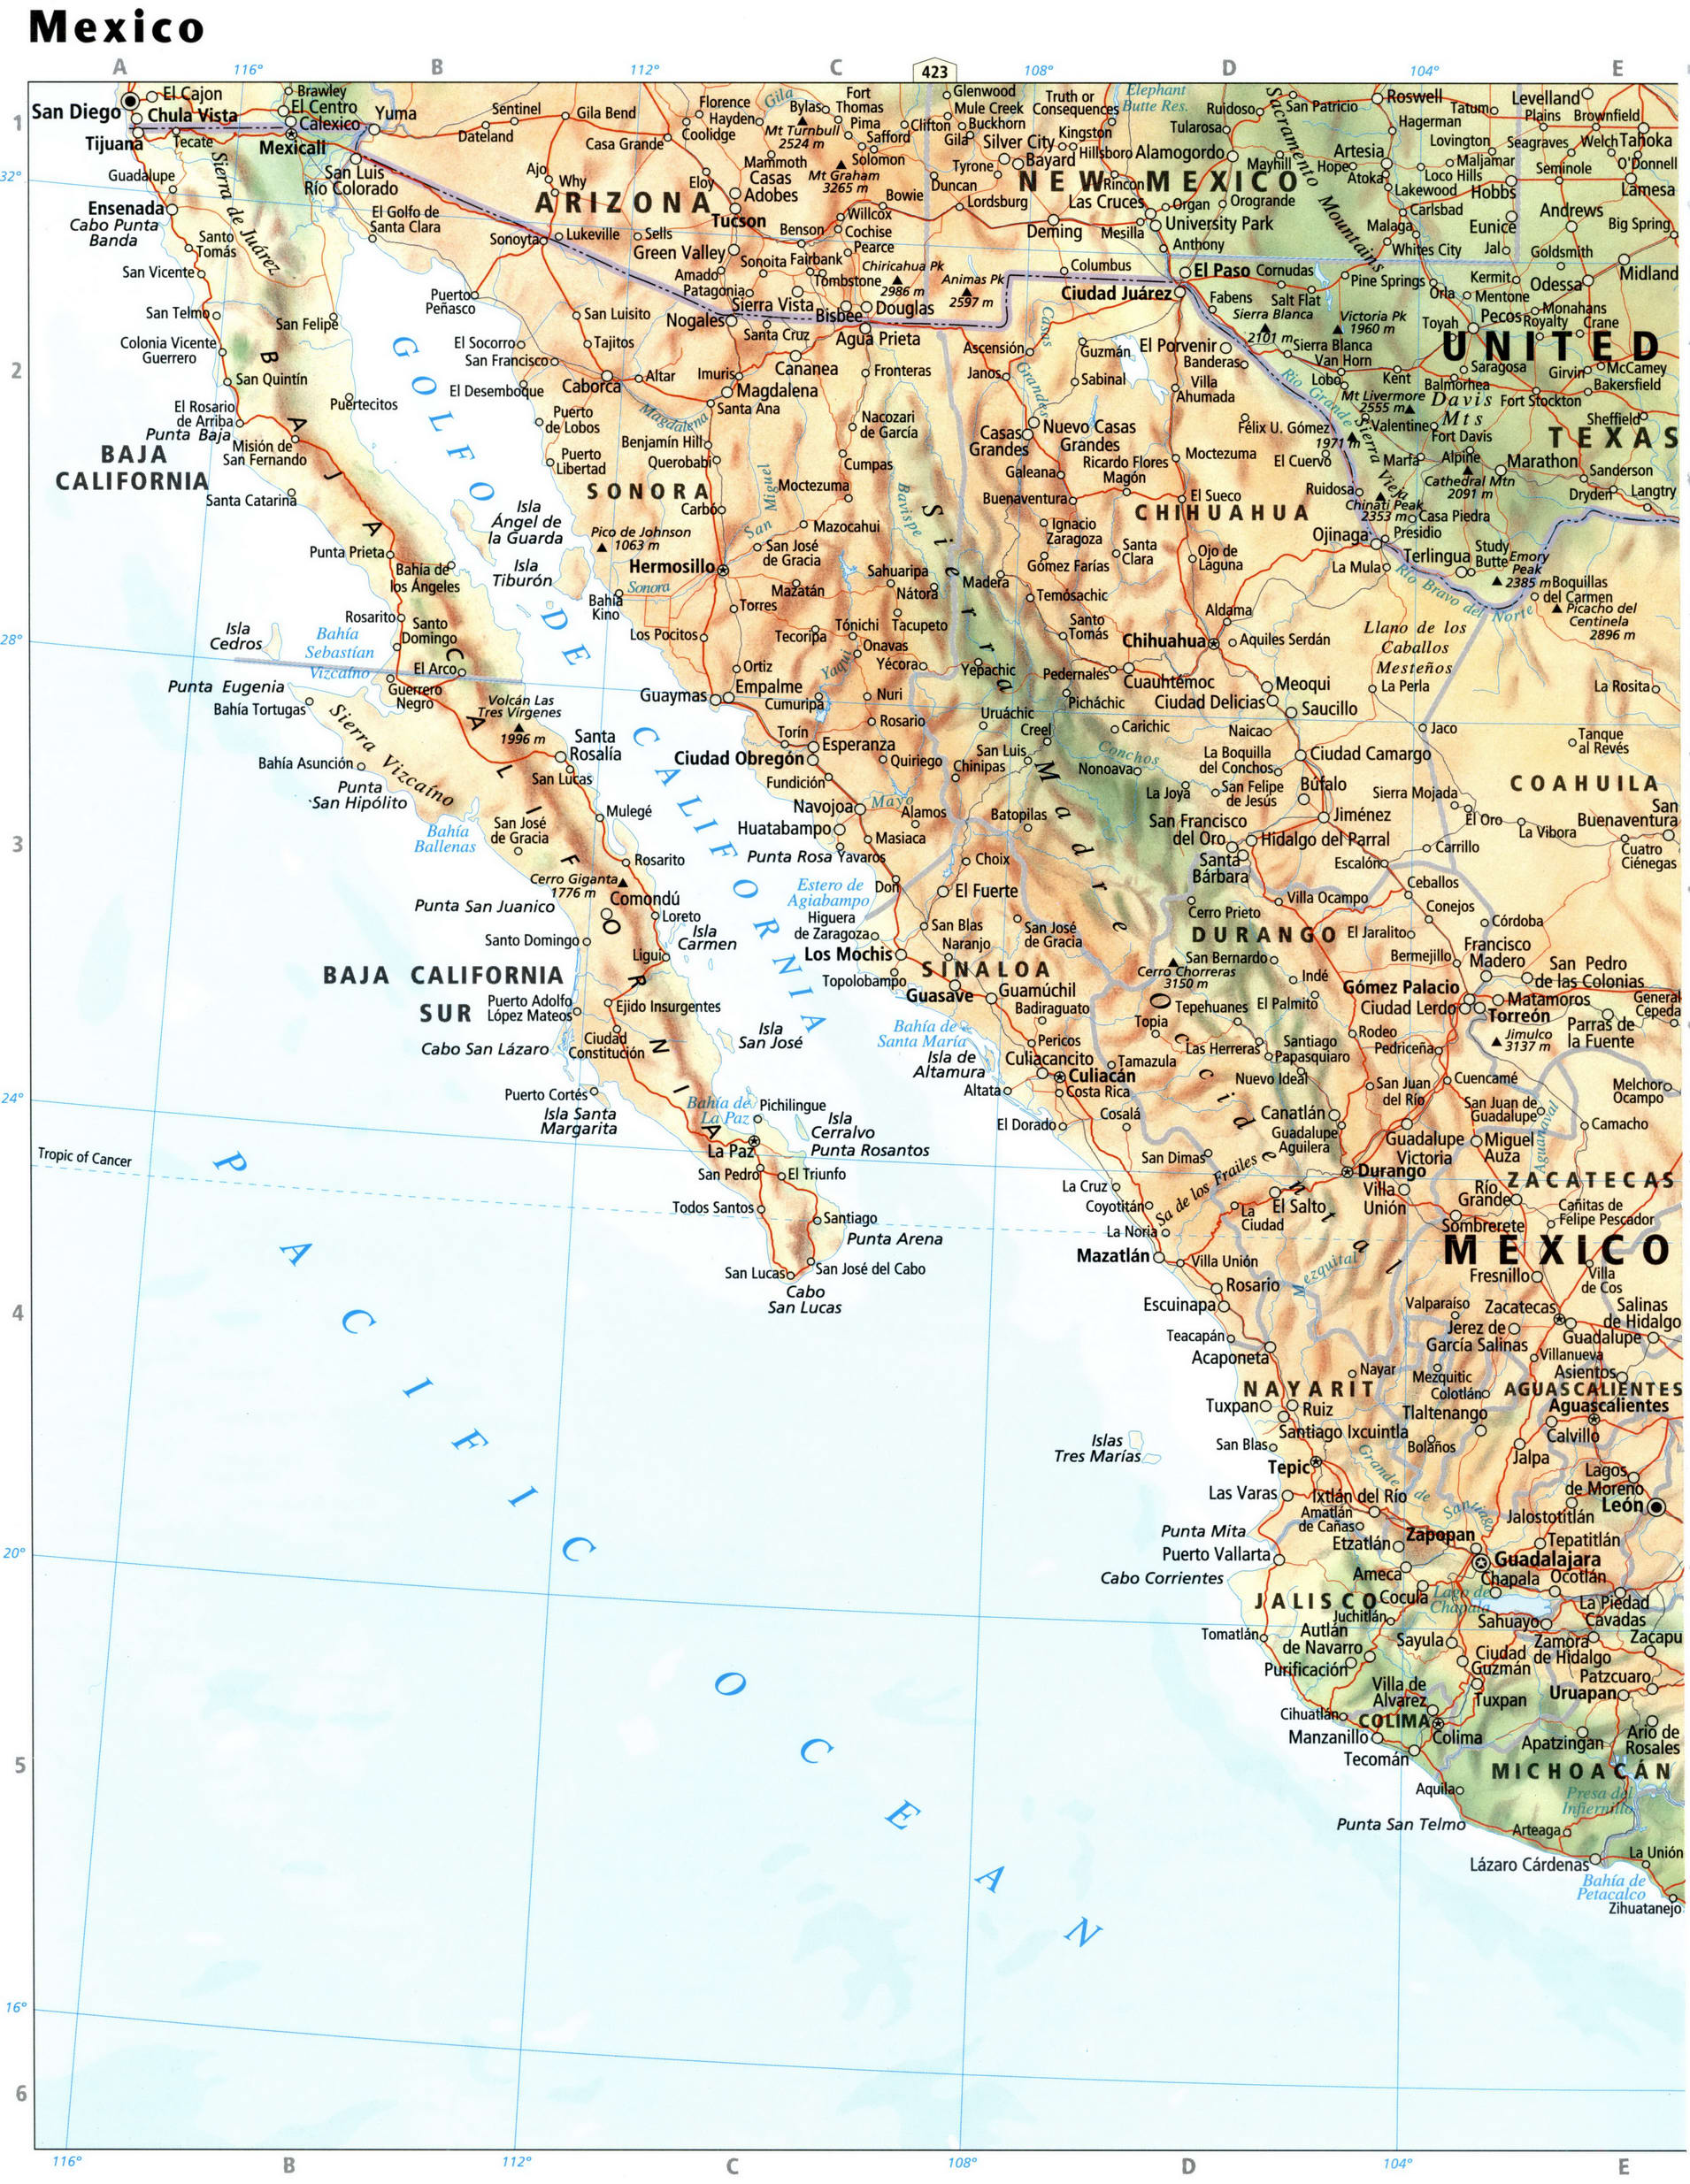 Pacific coast Mexico map